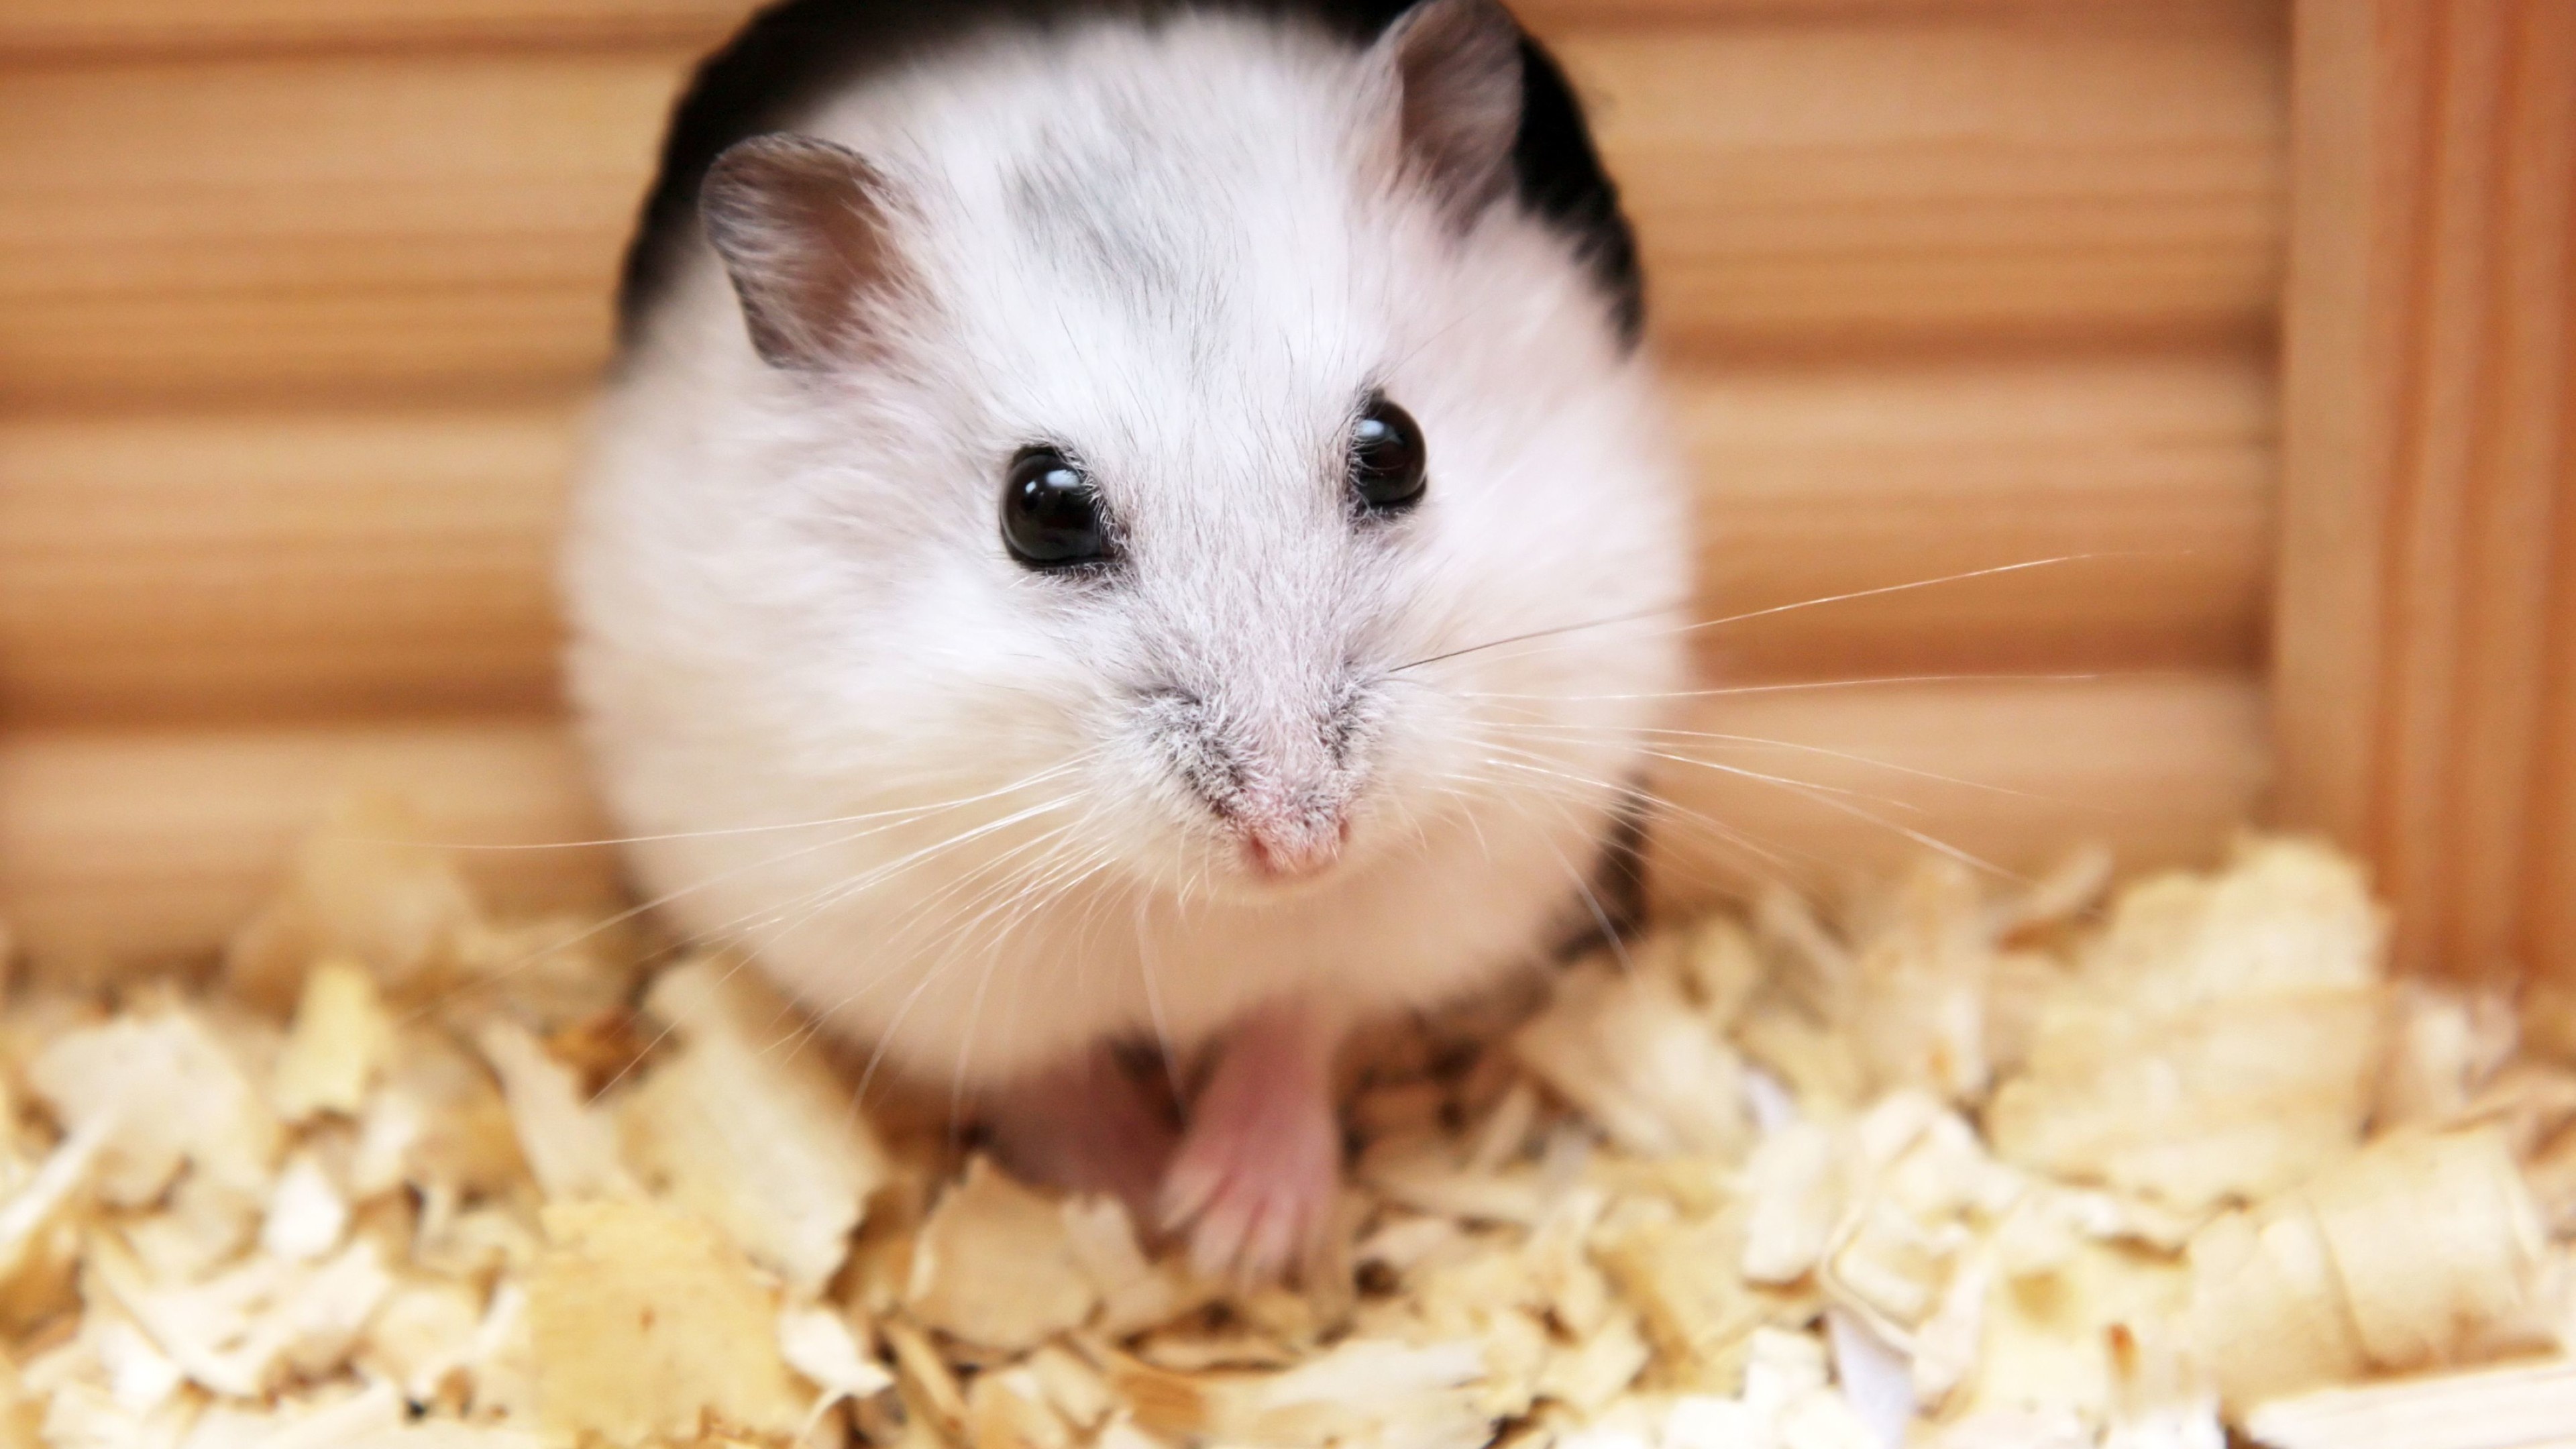 Cute baby hamster, Desktop wallpaper, High-definition image, Free download, 3840x2160 4K Desktop